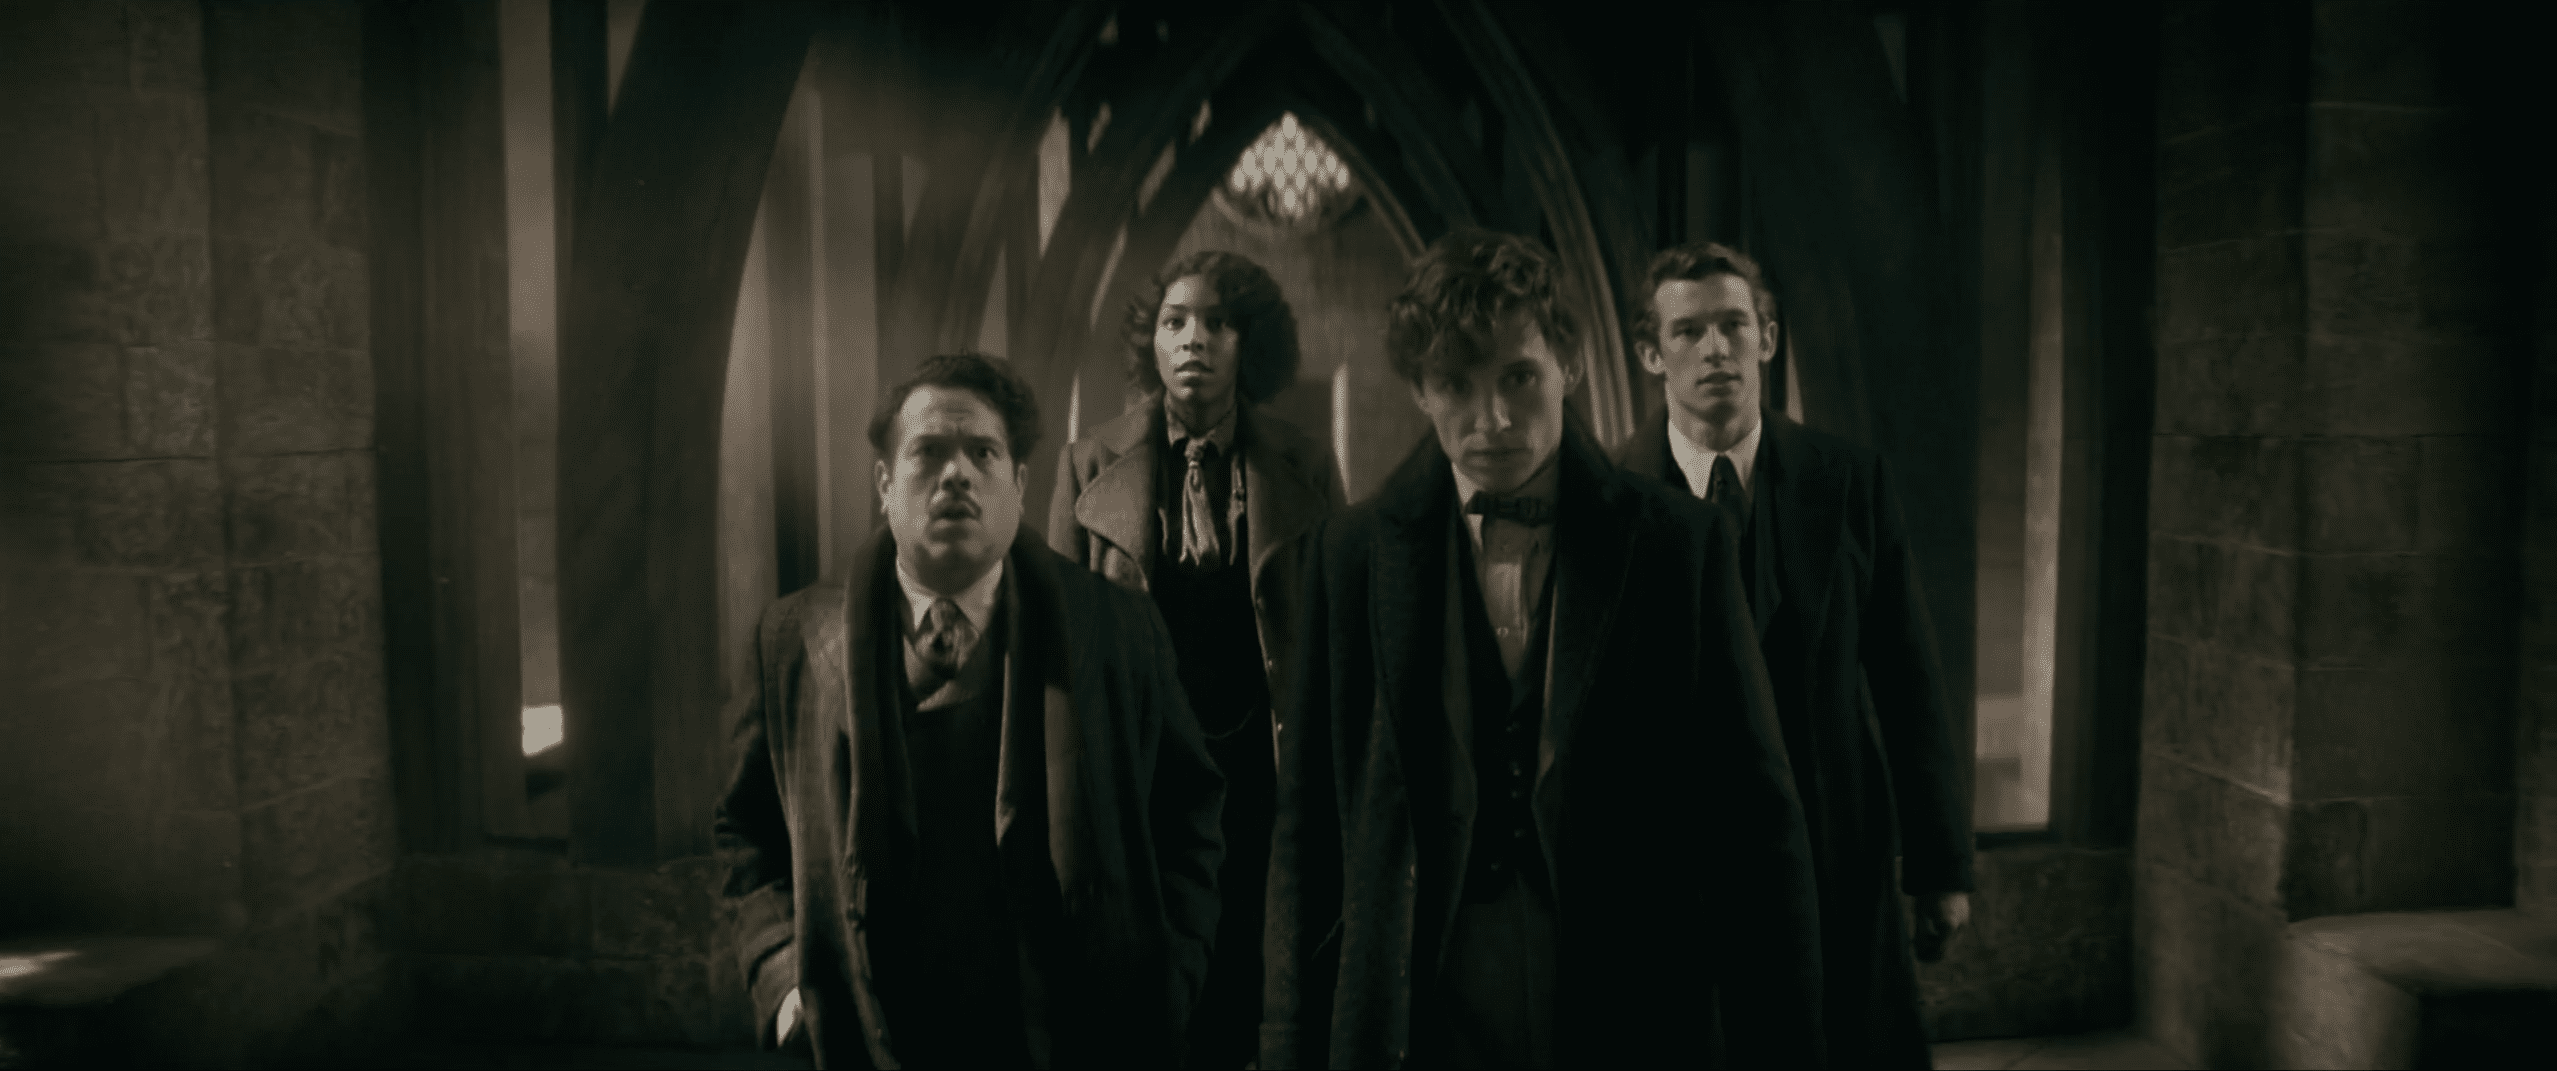 New Scamander, Jacob Kowalski, Theseus Scamander, and Lally Hicks walking through Hogwarts